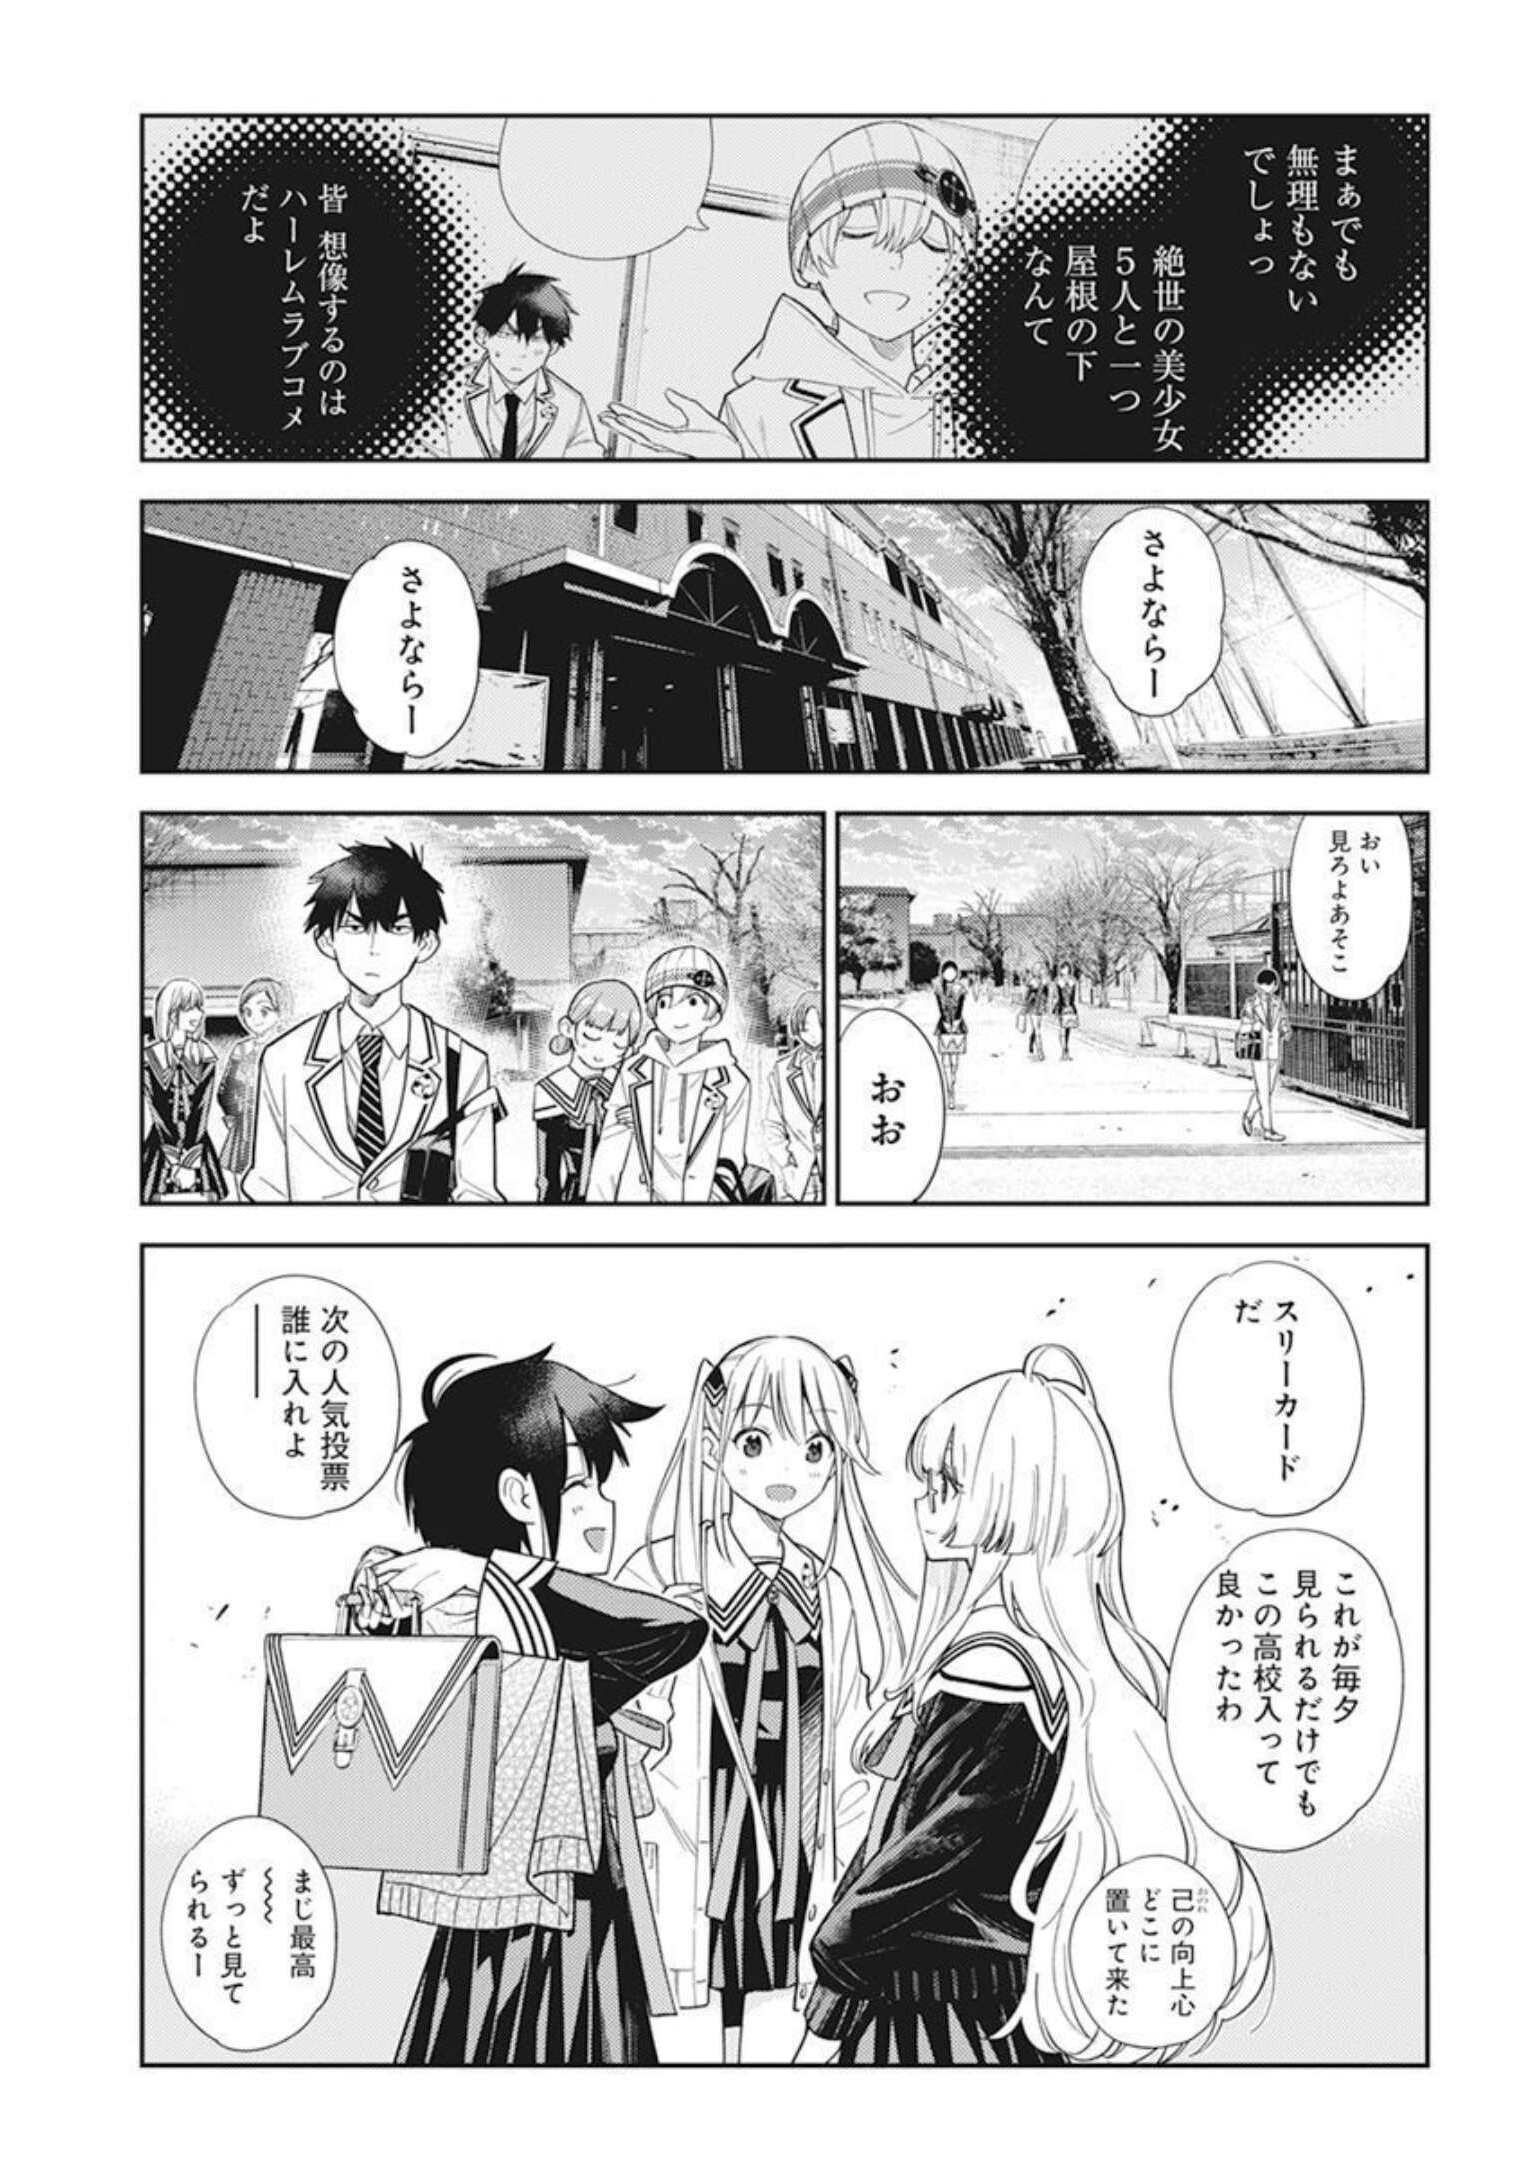 Shiunji-ke no Kodomotachi (Children of the Shiunji Family) - Chapter 01 - Page 38